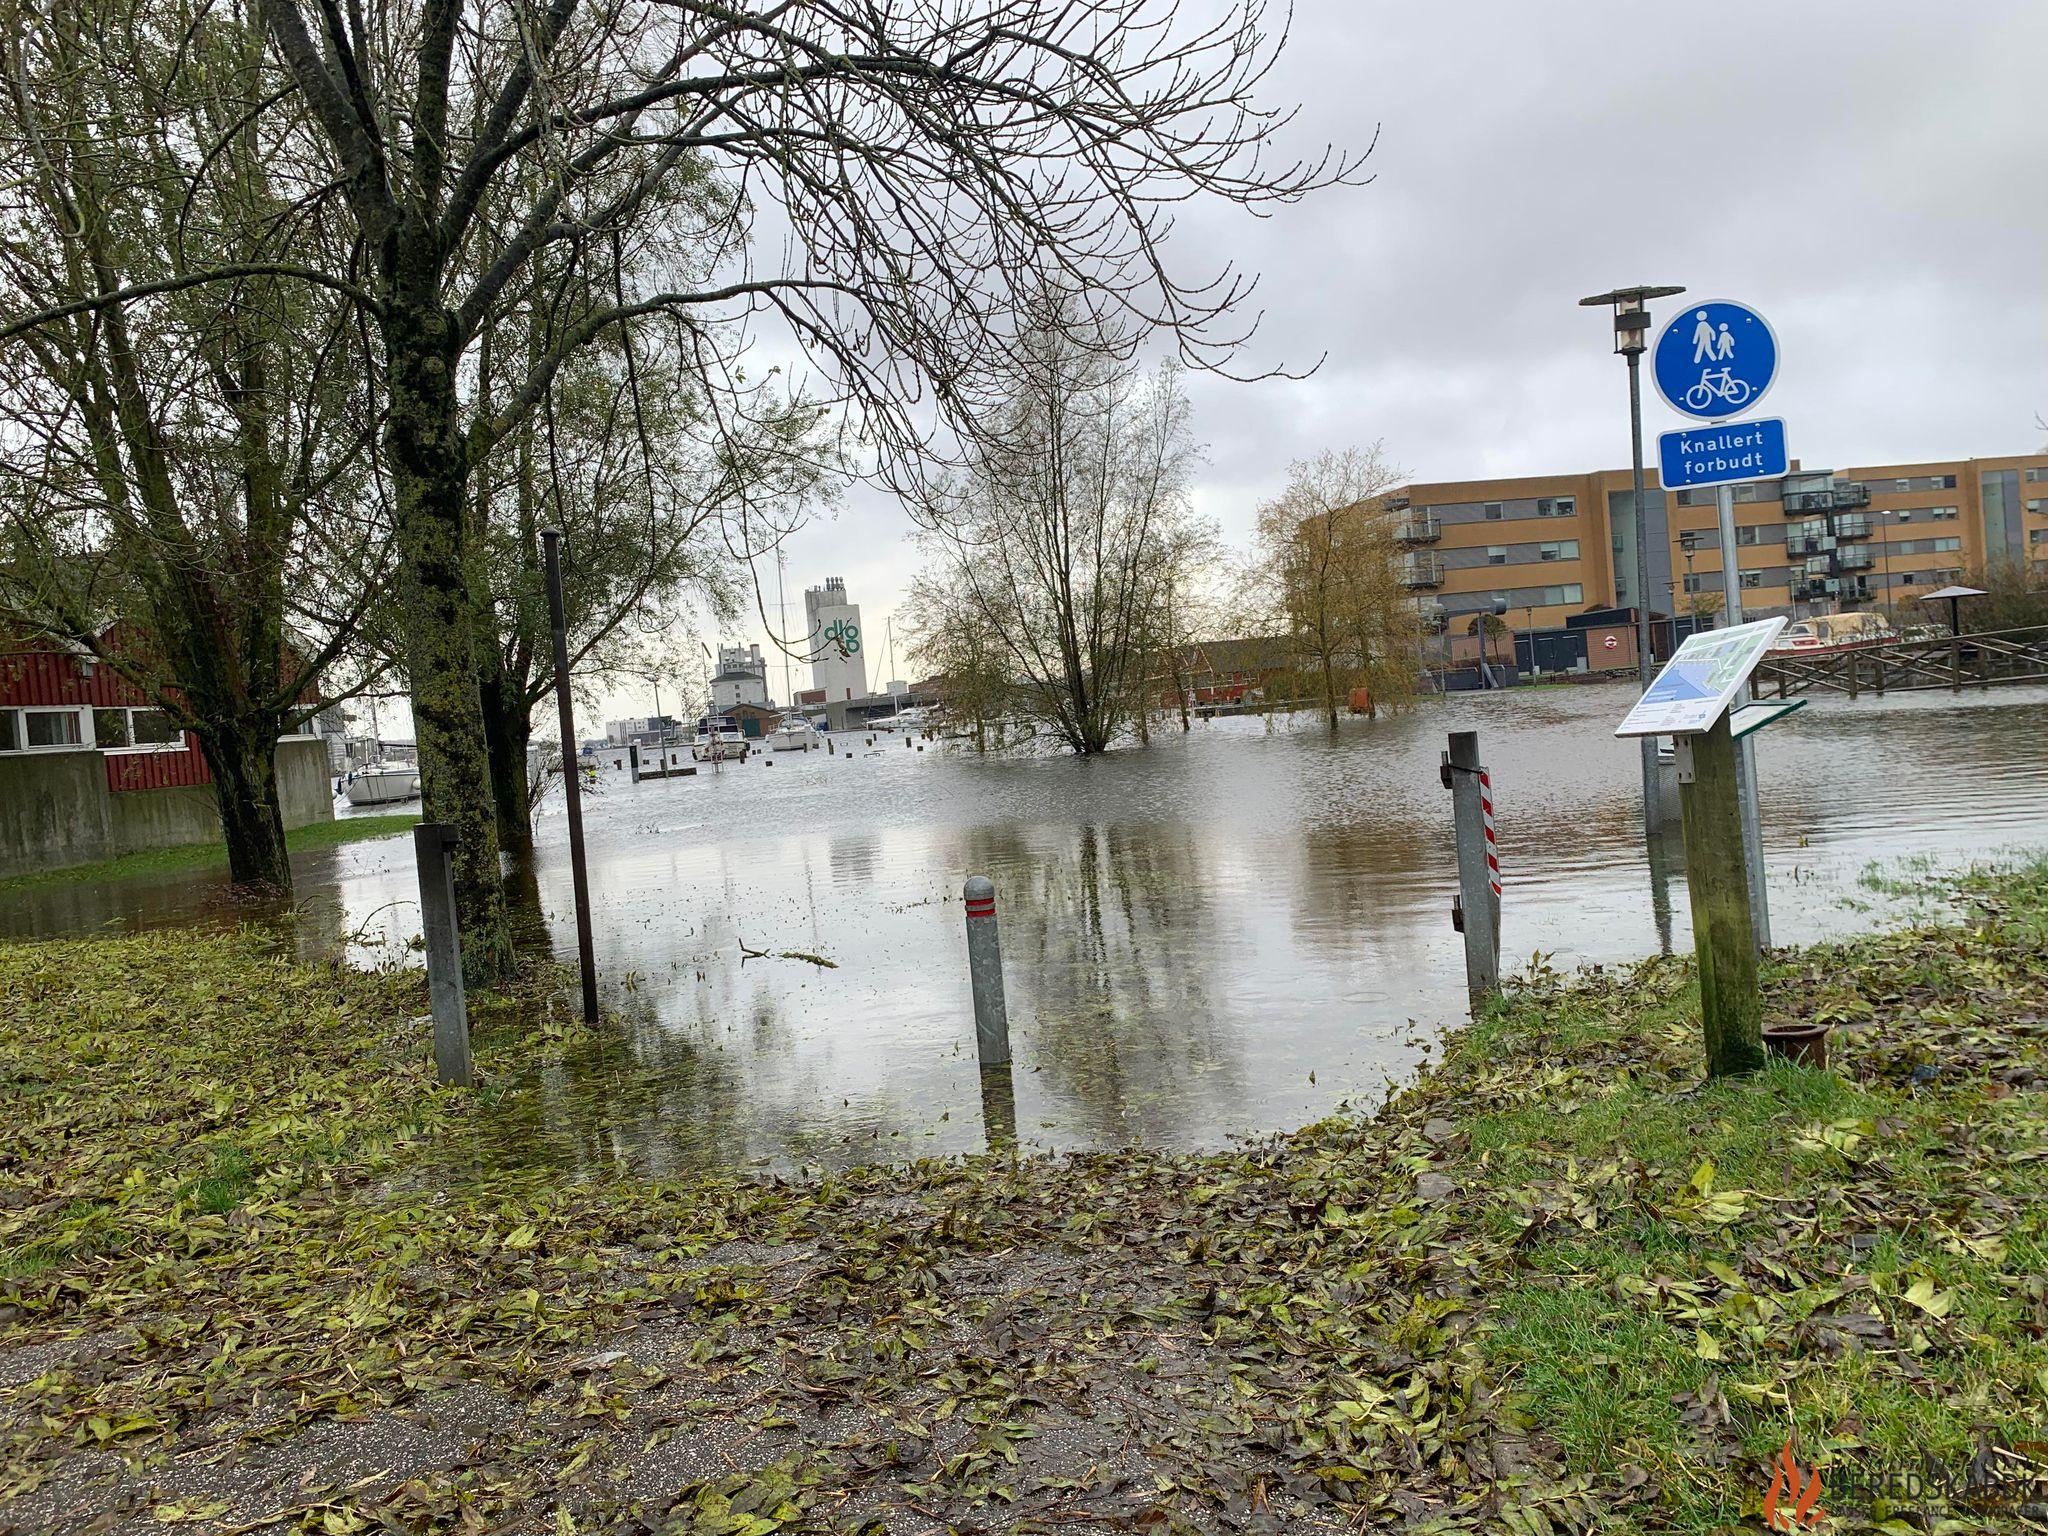 14/11-23 Oversvømmelser i Randers